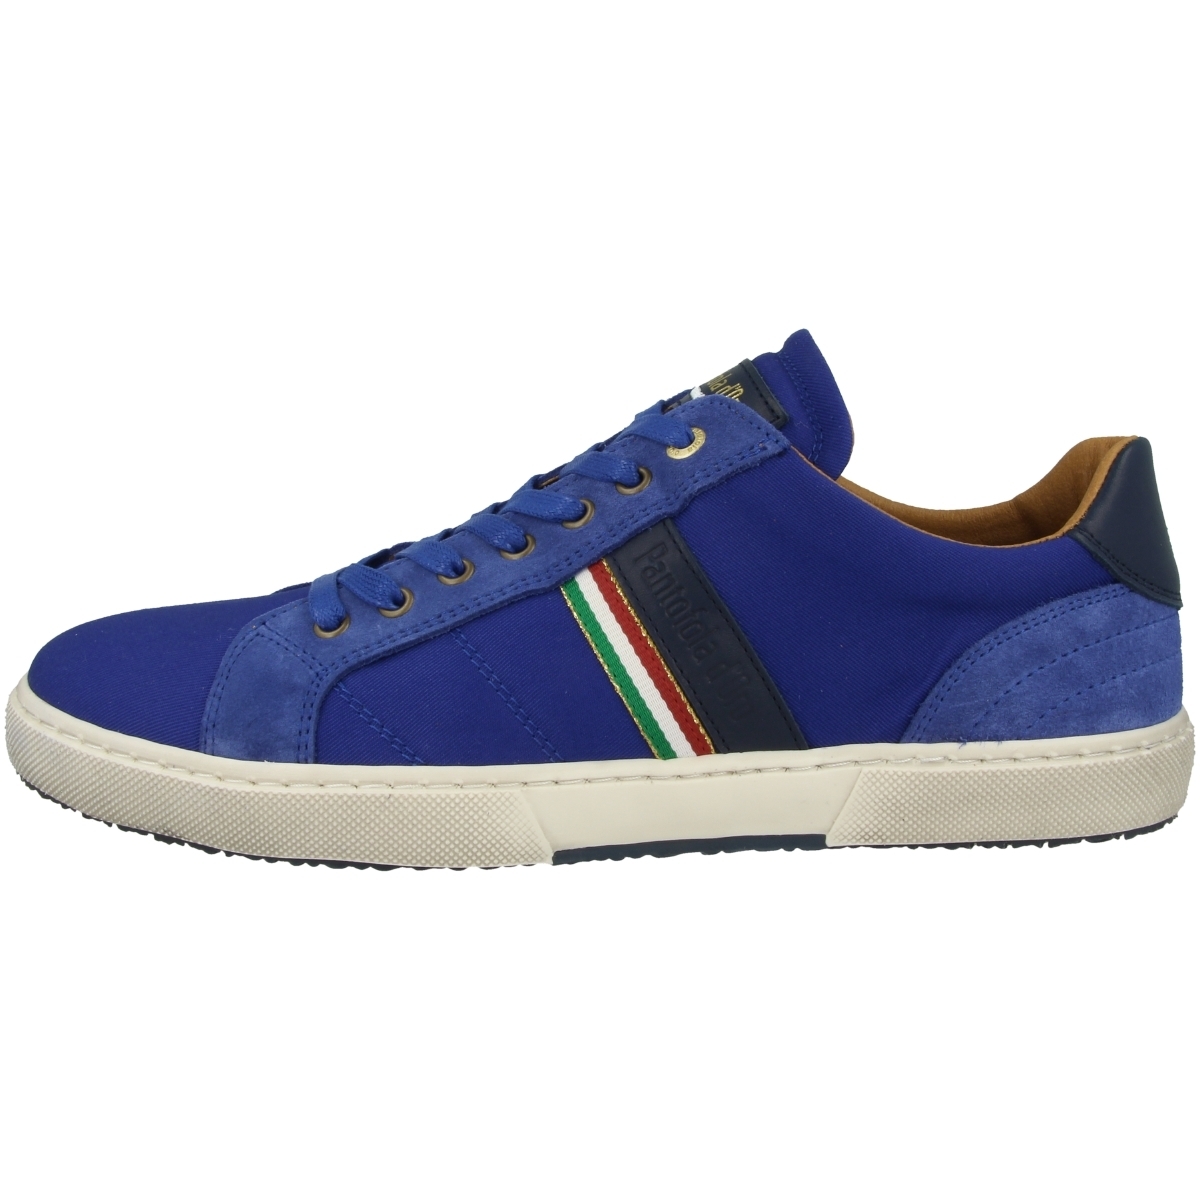 Pantofola d'Oro Modena Canvas Uomo Low Sneaker low blau